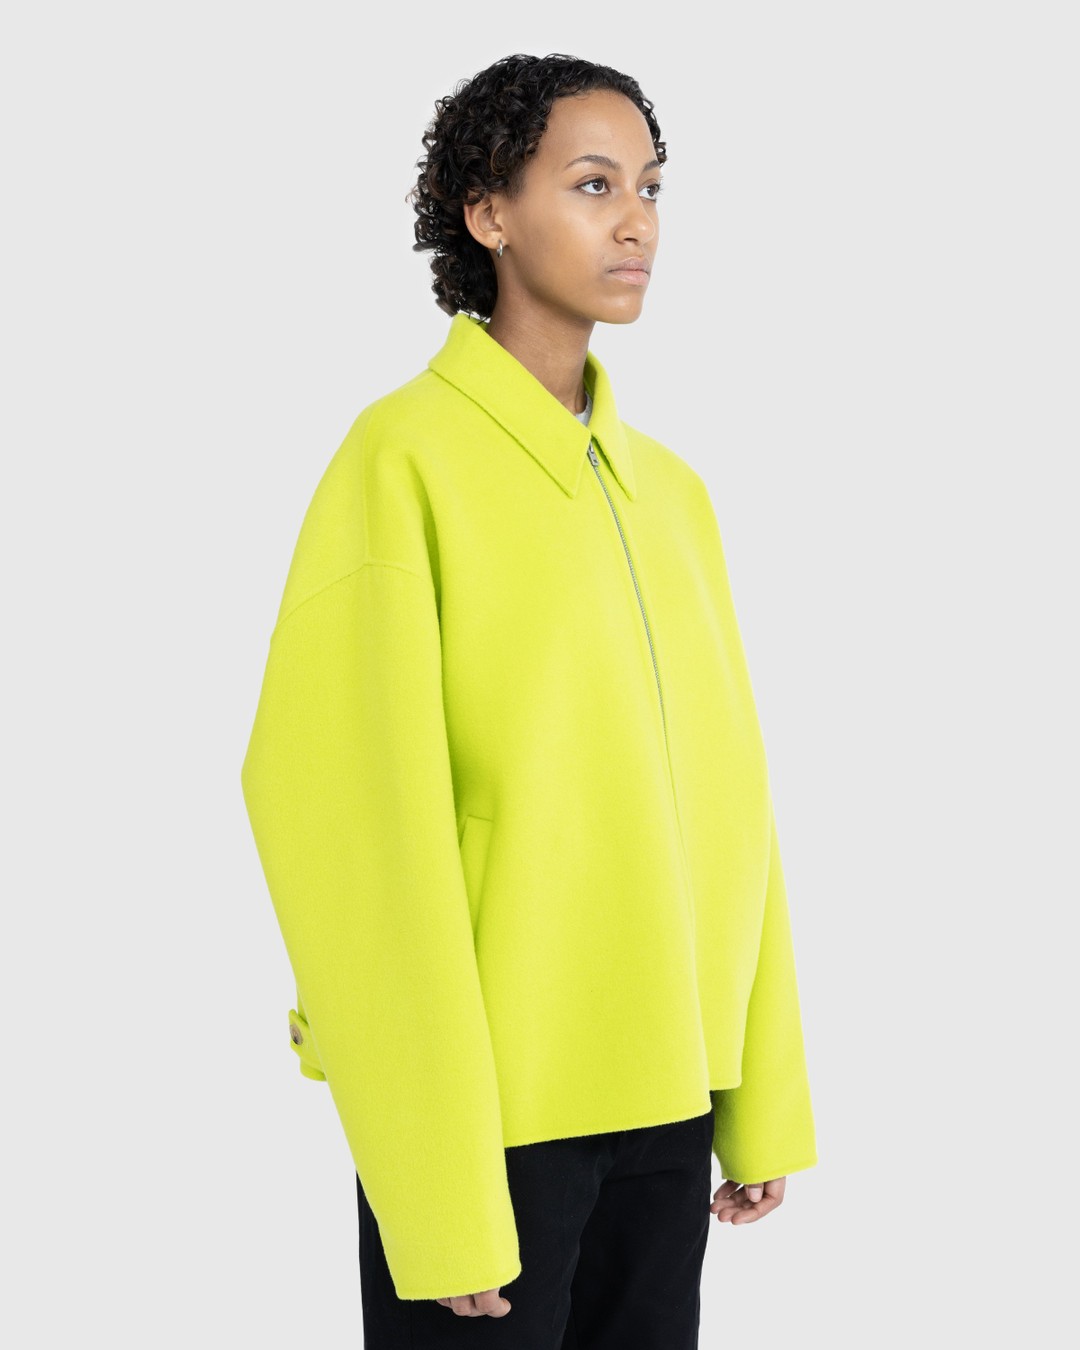 Acne Studios – Wool Zipper Jacket Lime Green - Jackets - Green - Image 3